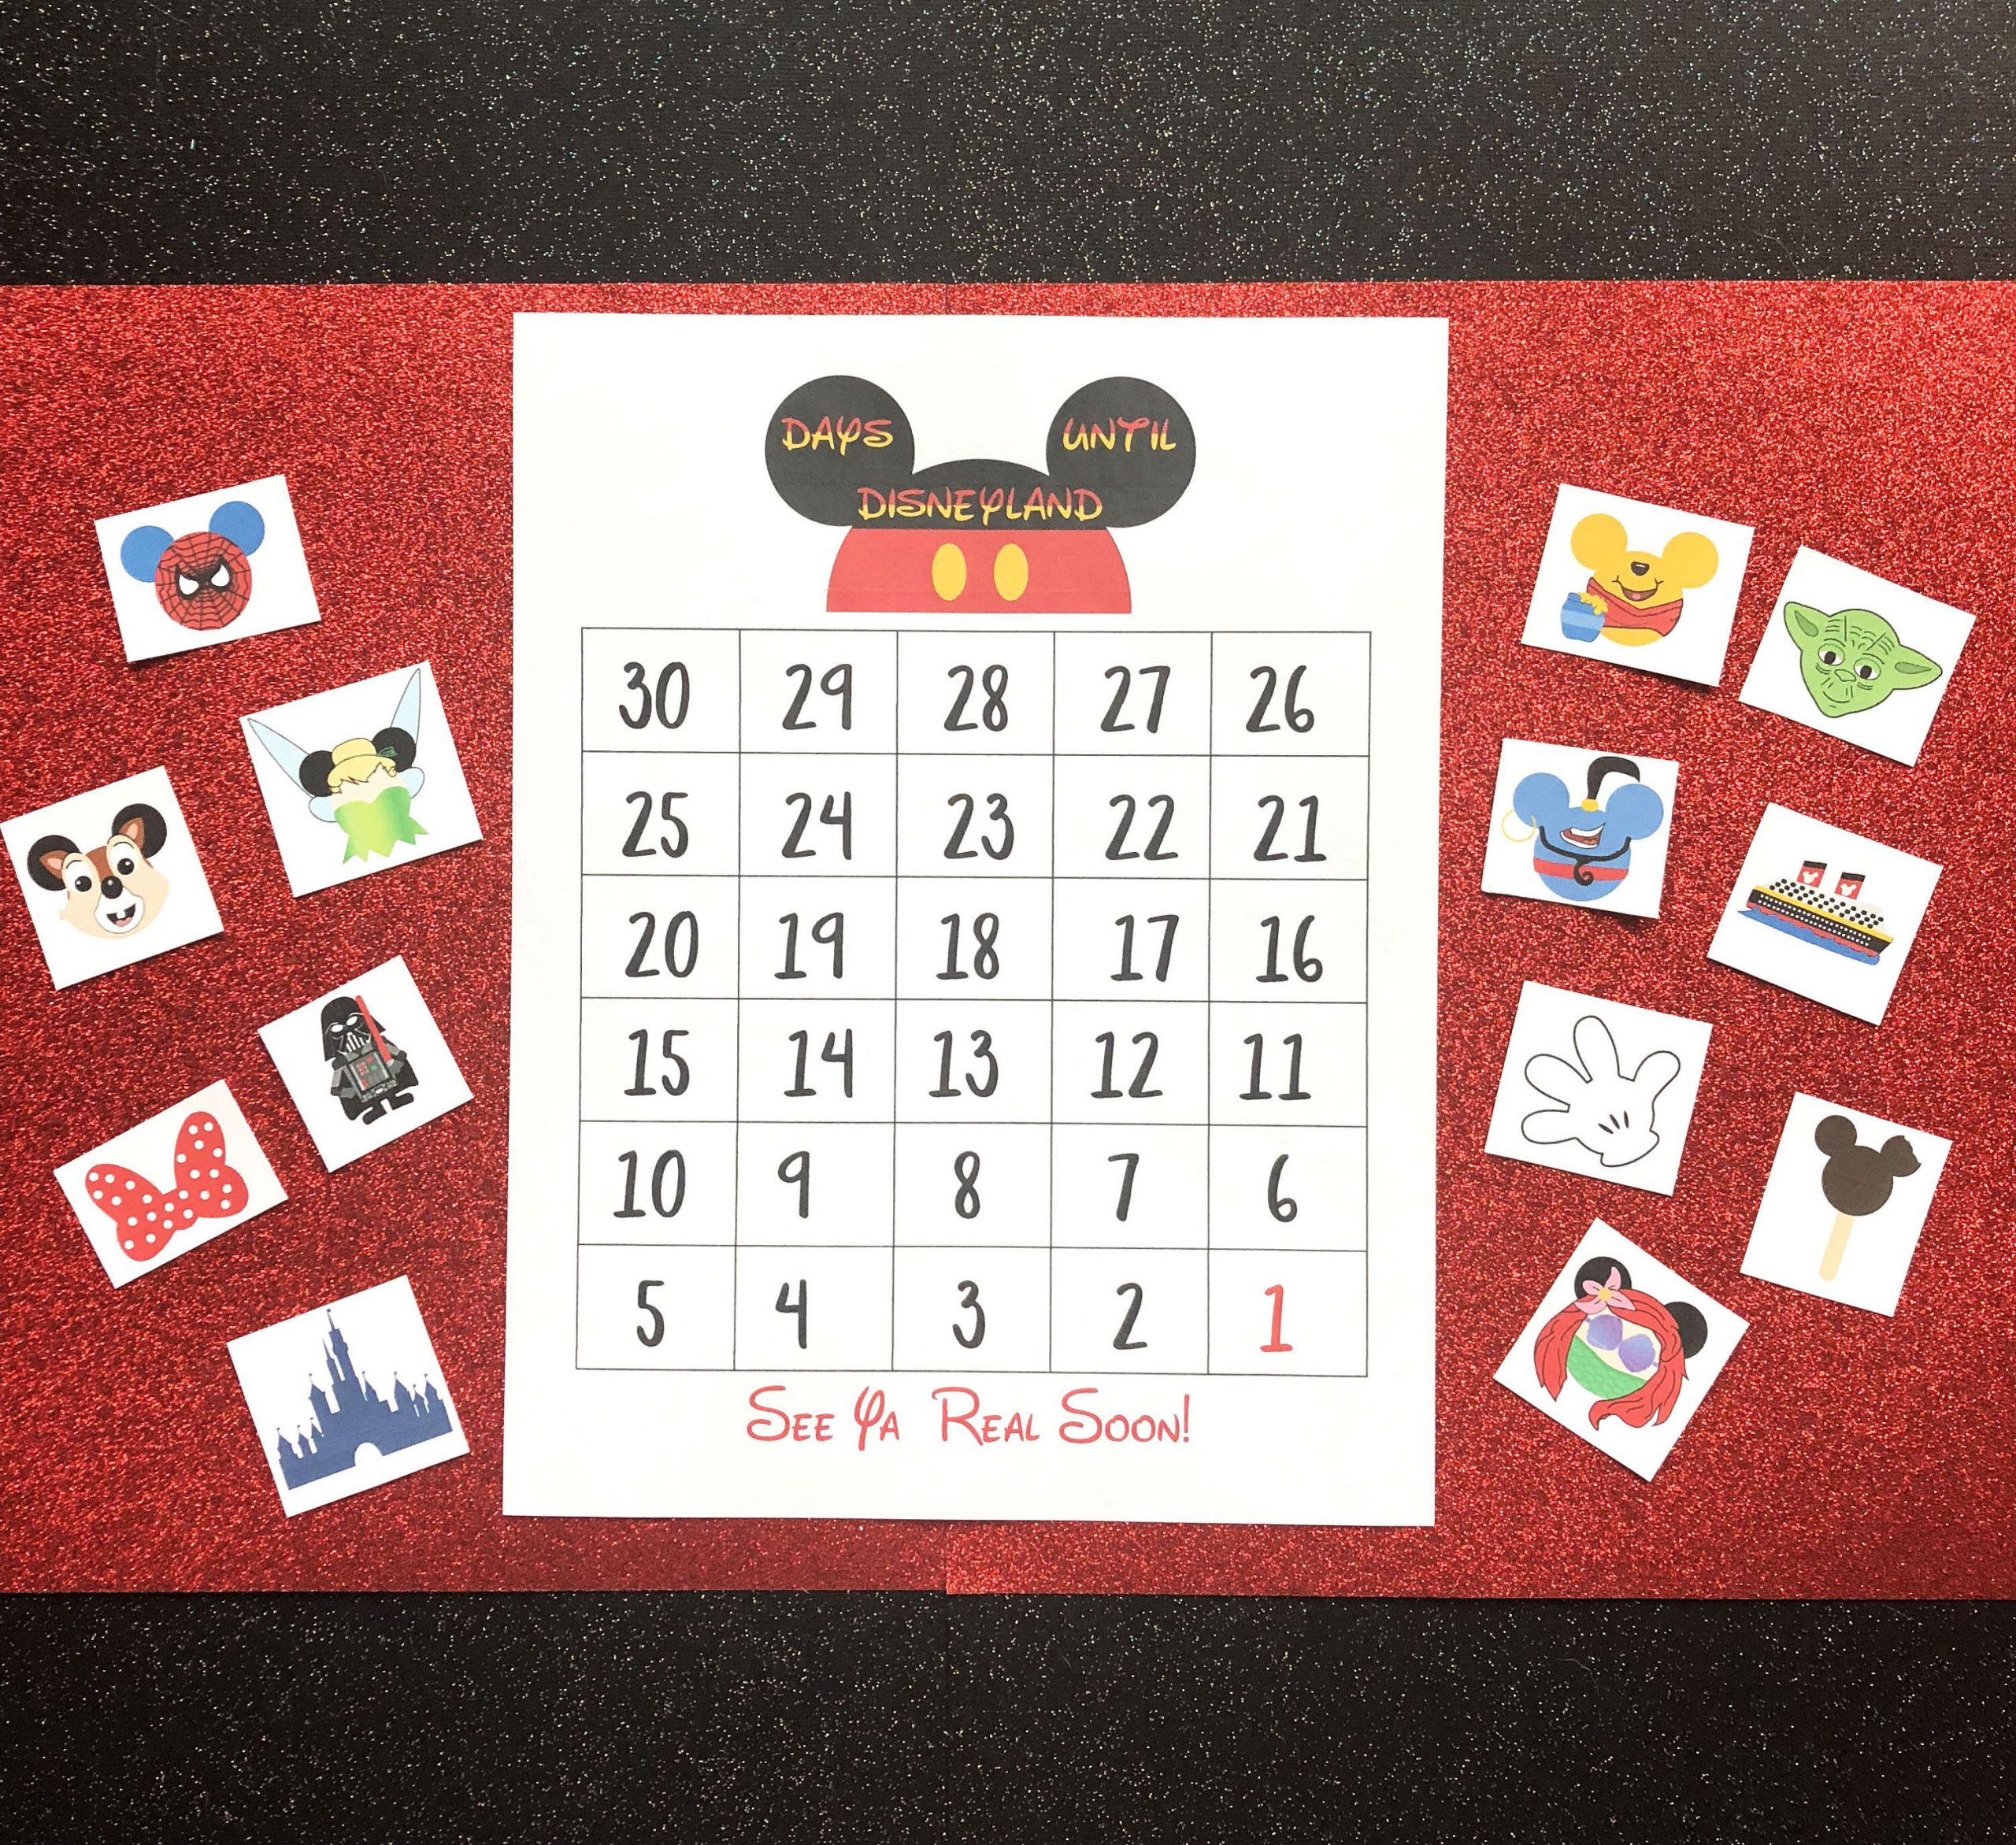 Disney Disney World Disneyland Disney Cruise Disney | Etsy Printable Countdown To Disneyuntdown Calendar Printable